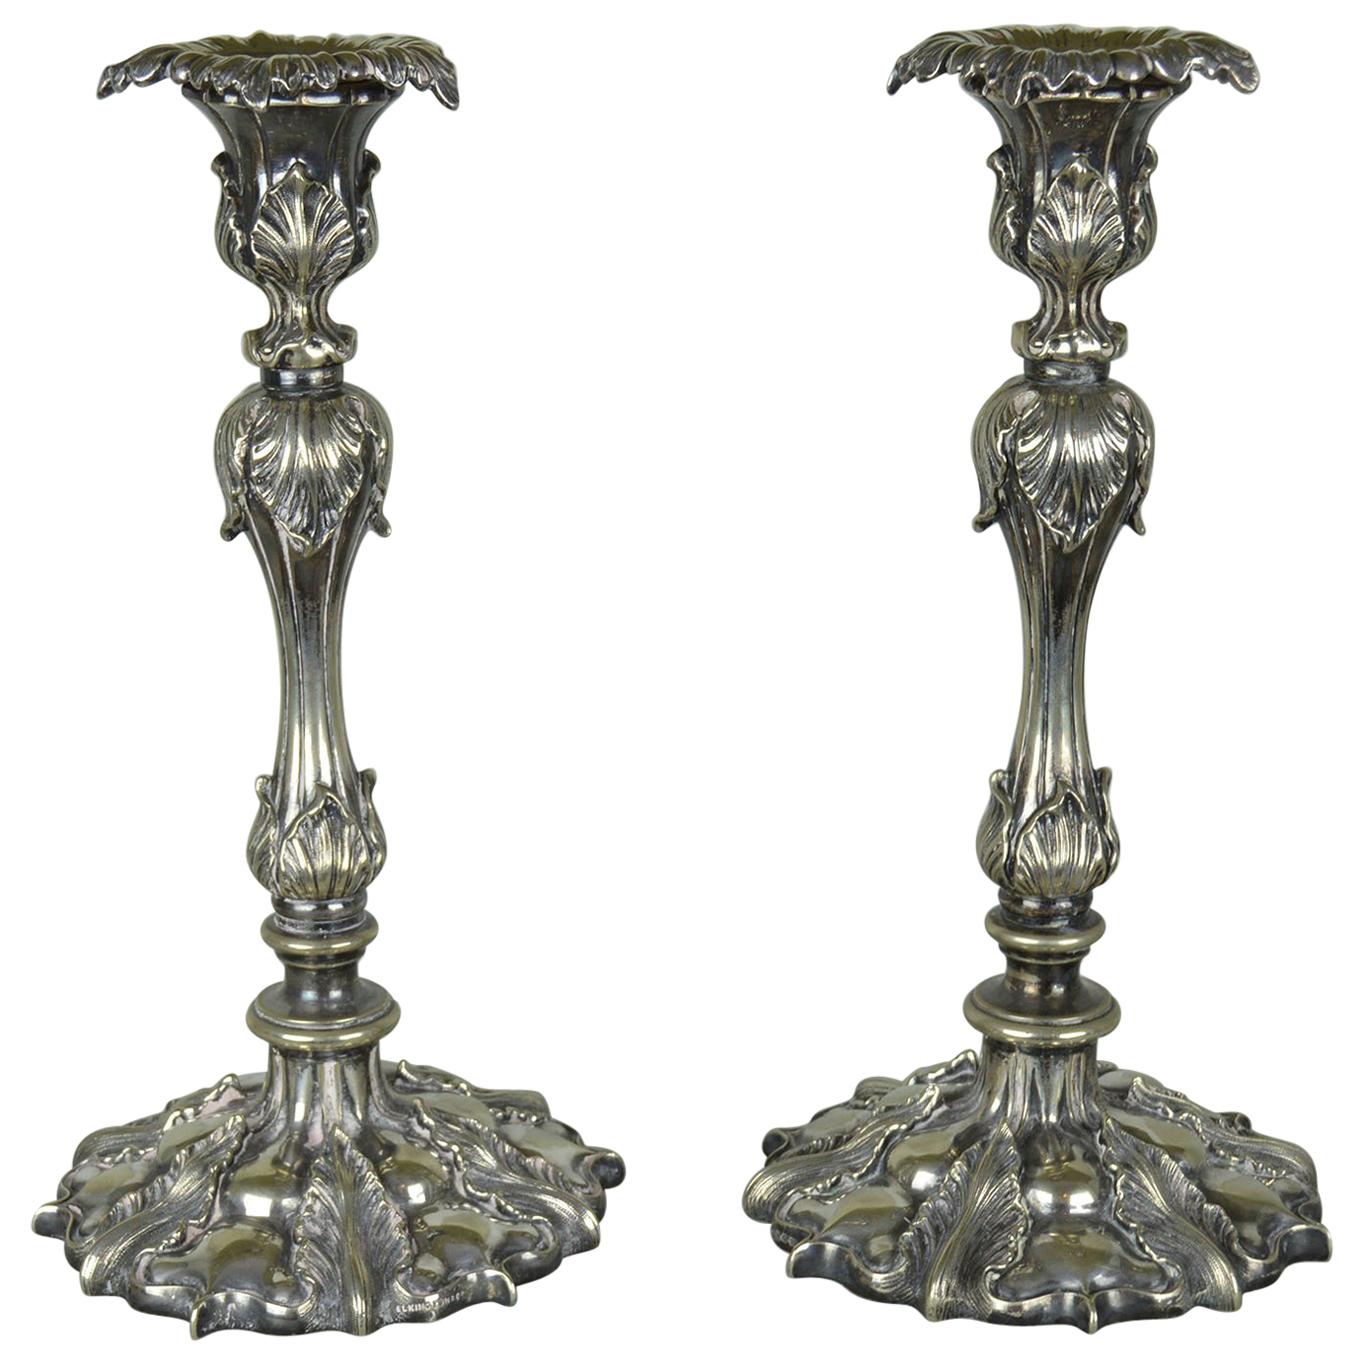 Pair of Antique Renaissance Revival Candlesticks, English Late 19th Century